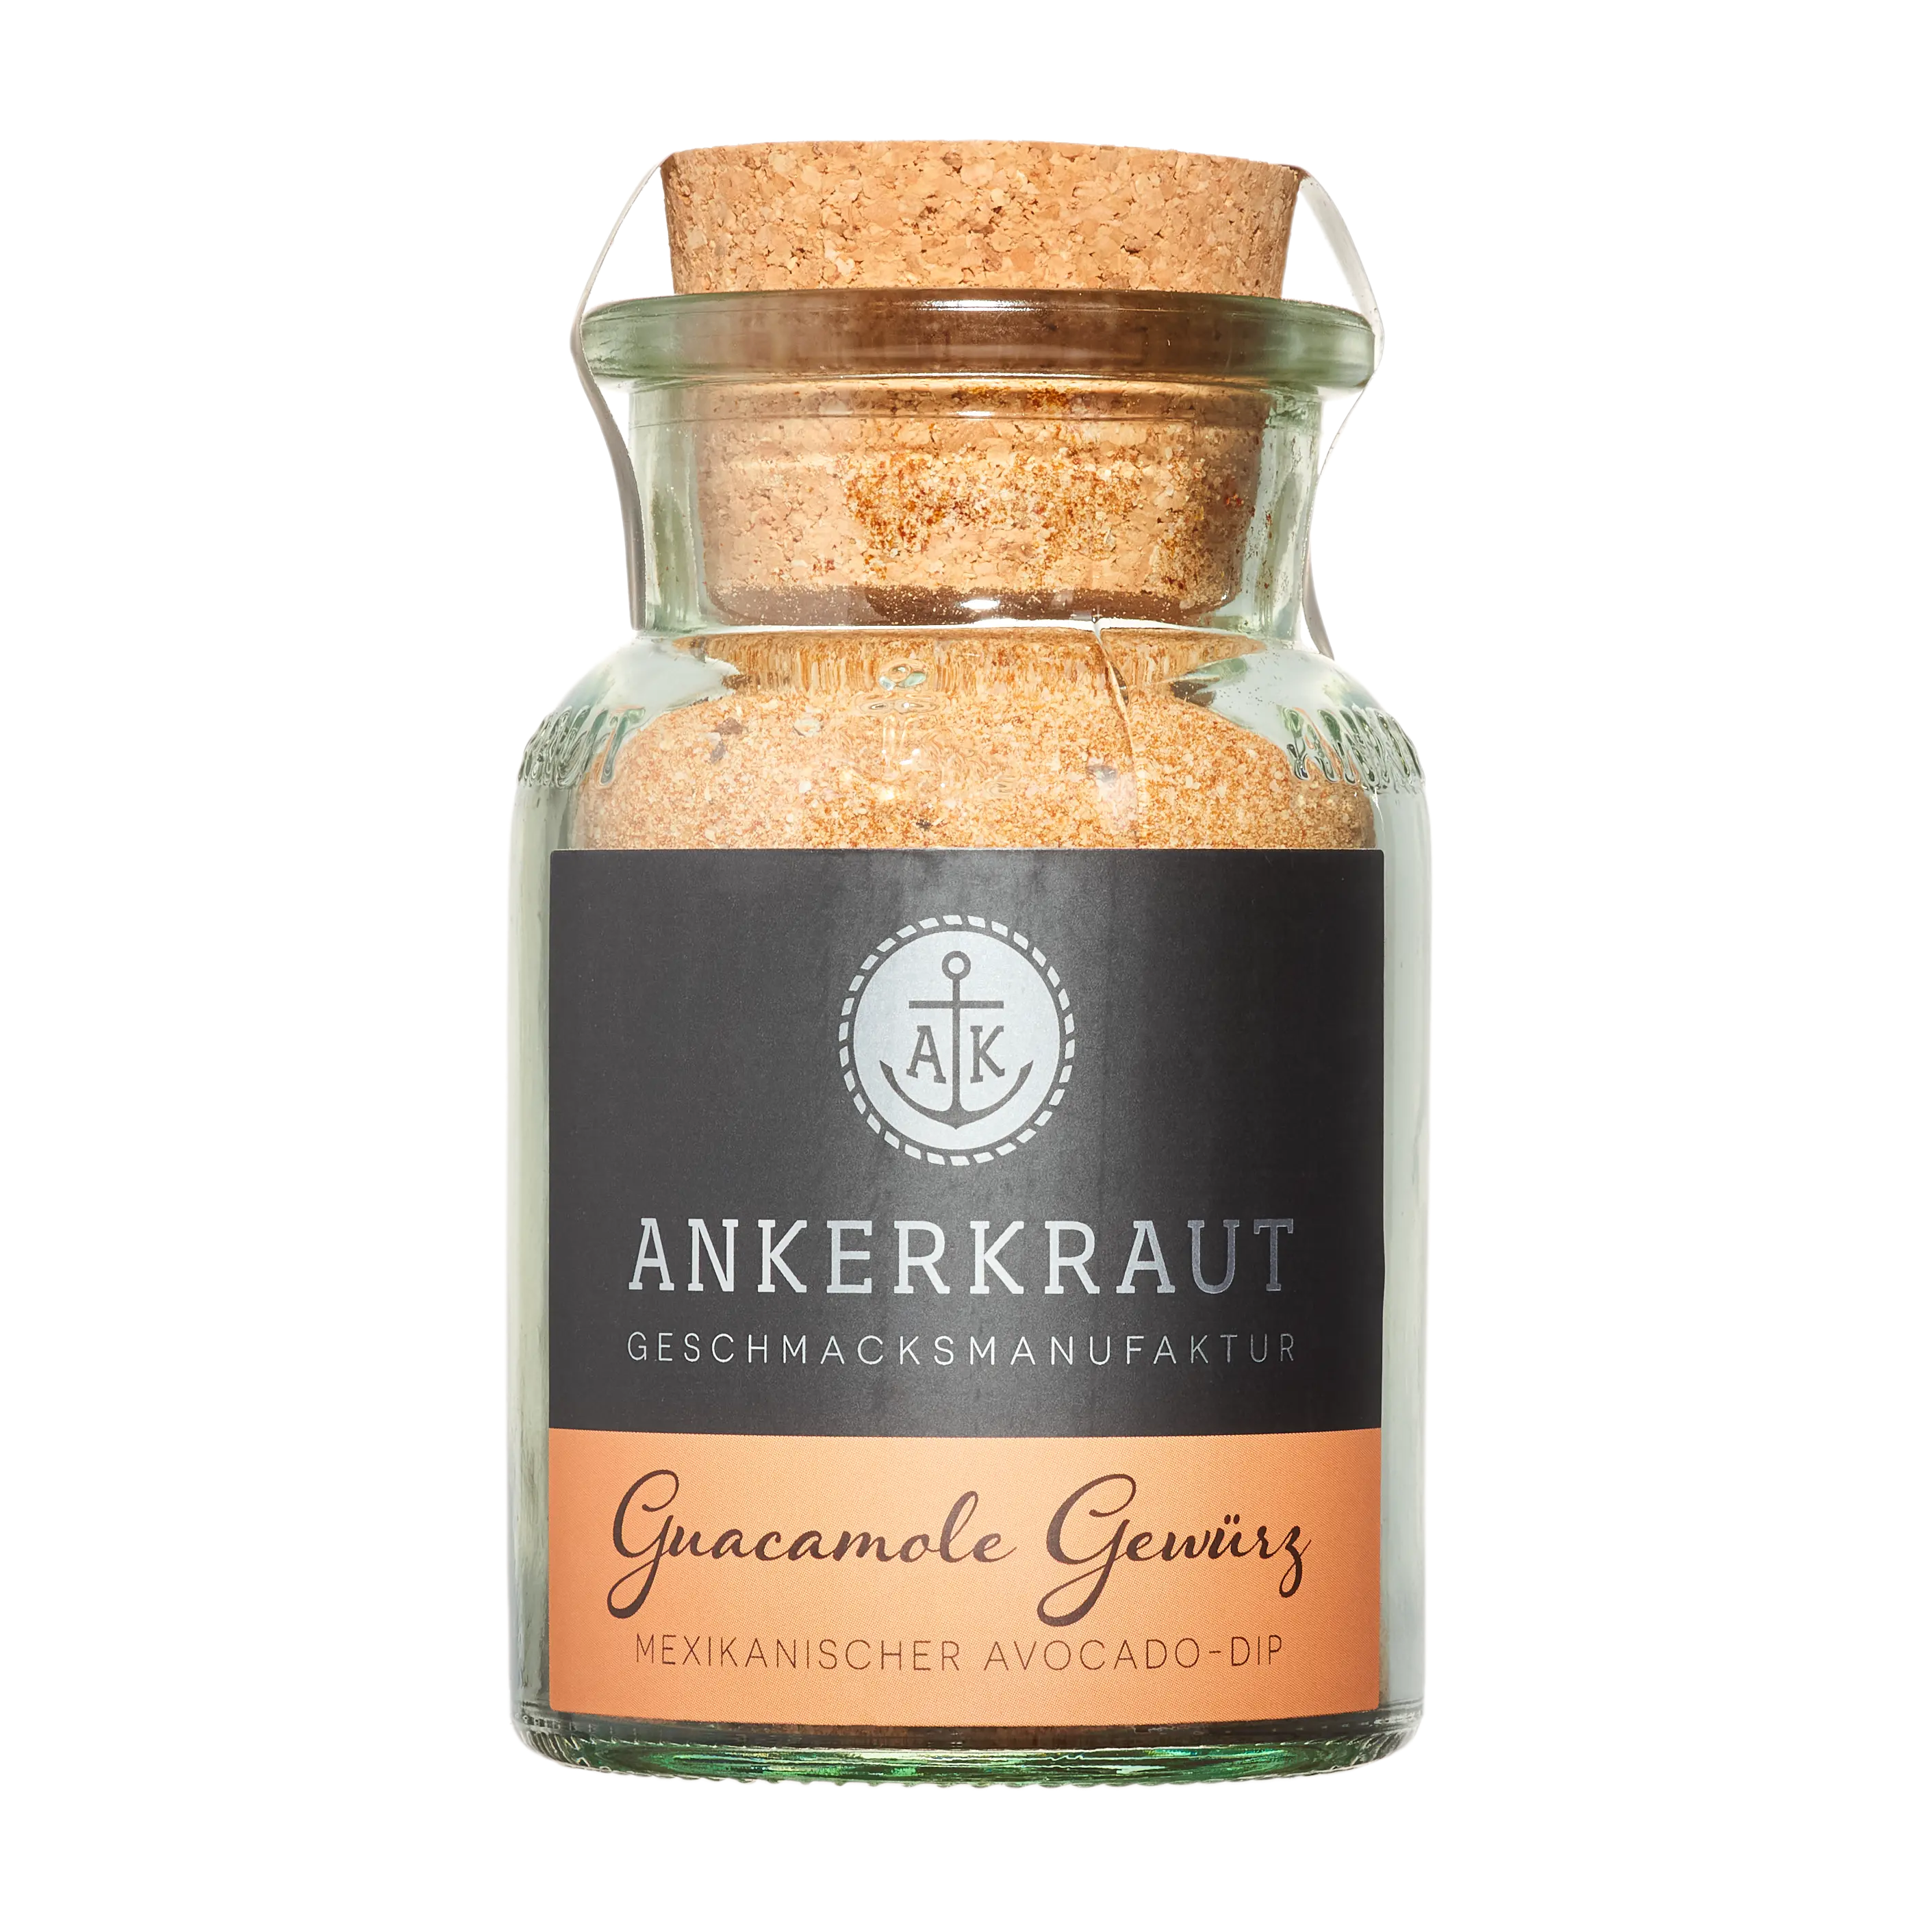 Ankerkraut Guacamole Gewuerz 1